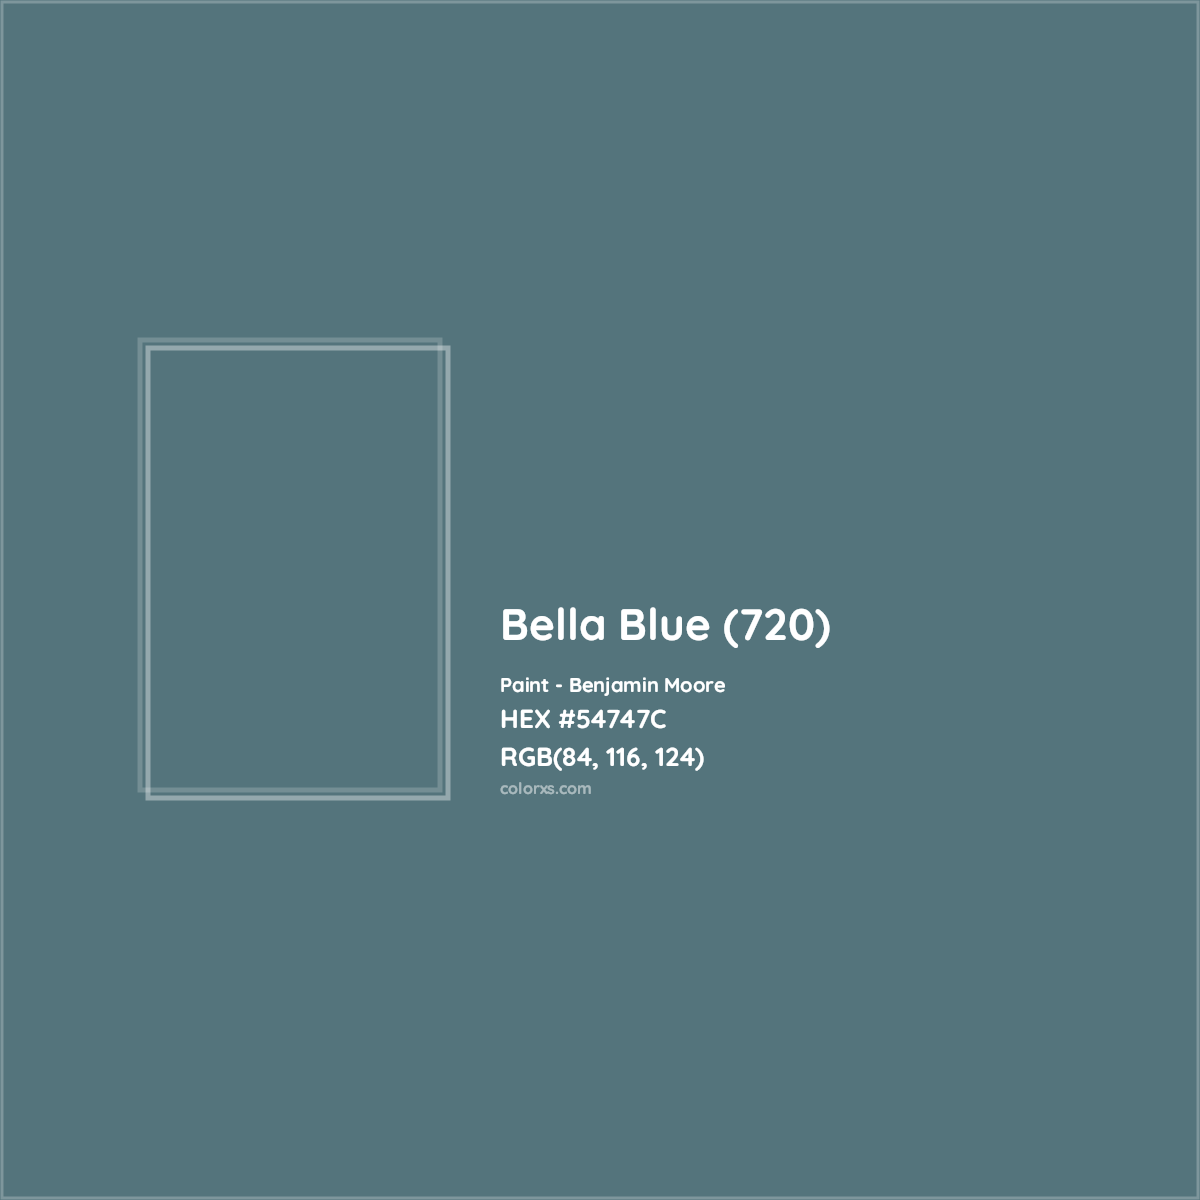 HEX #54747C Bella Blue (720) Paint Benjamin Moore - Color Code